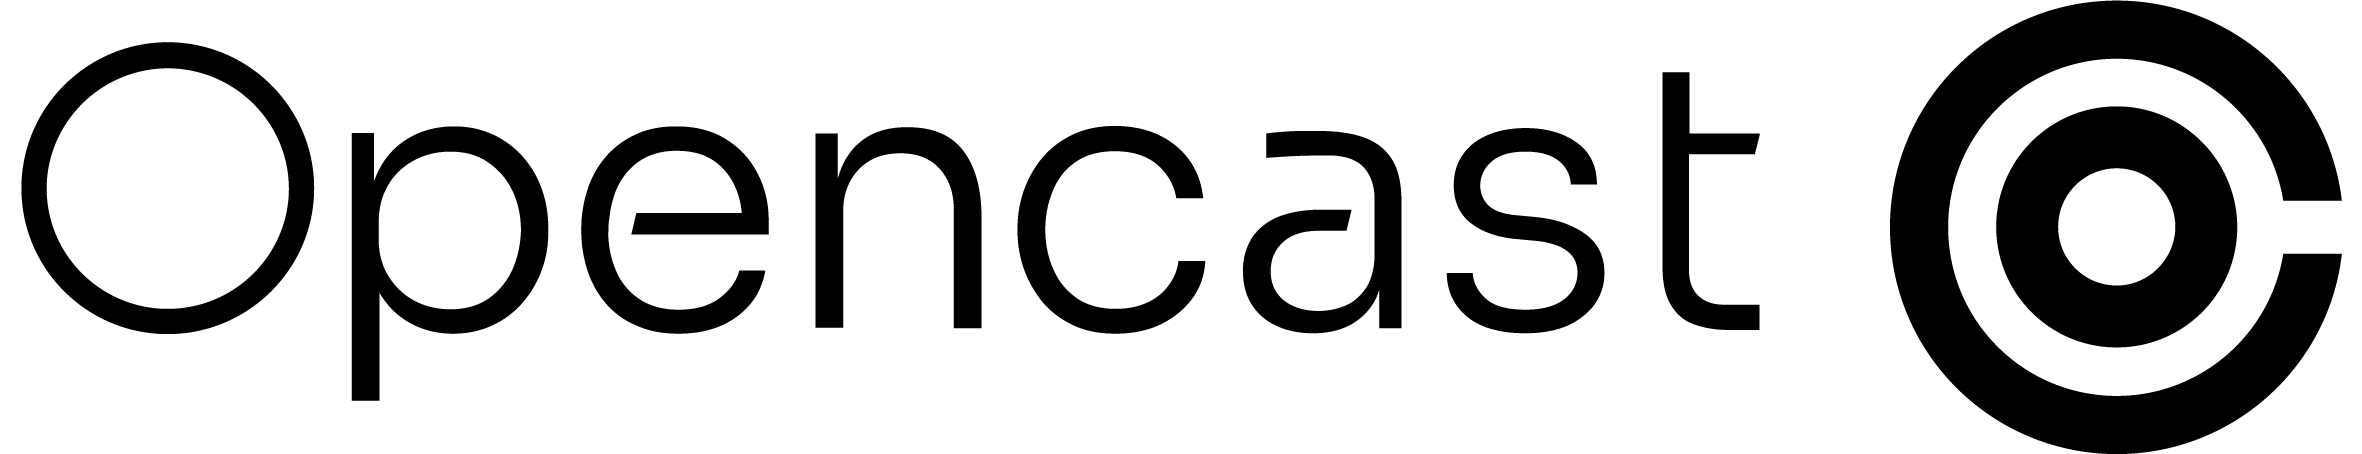 logo for Opencast Software